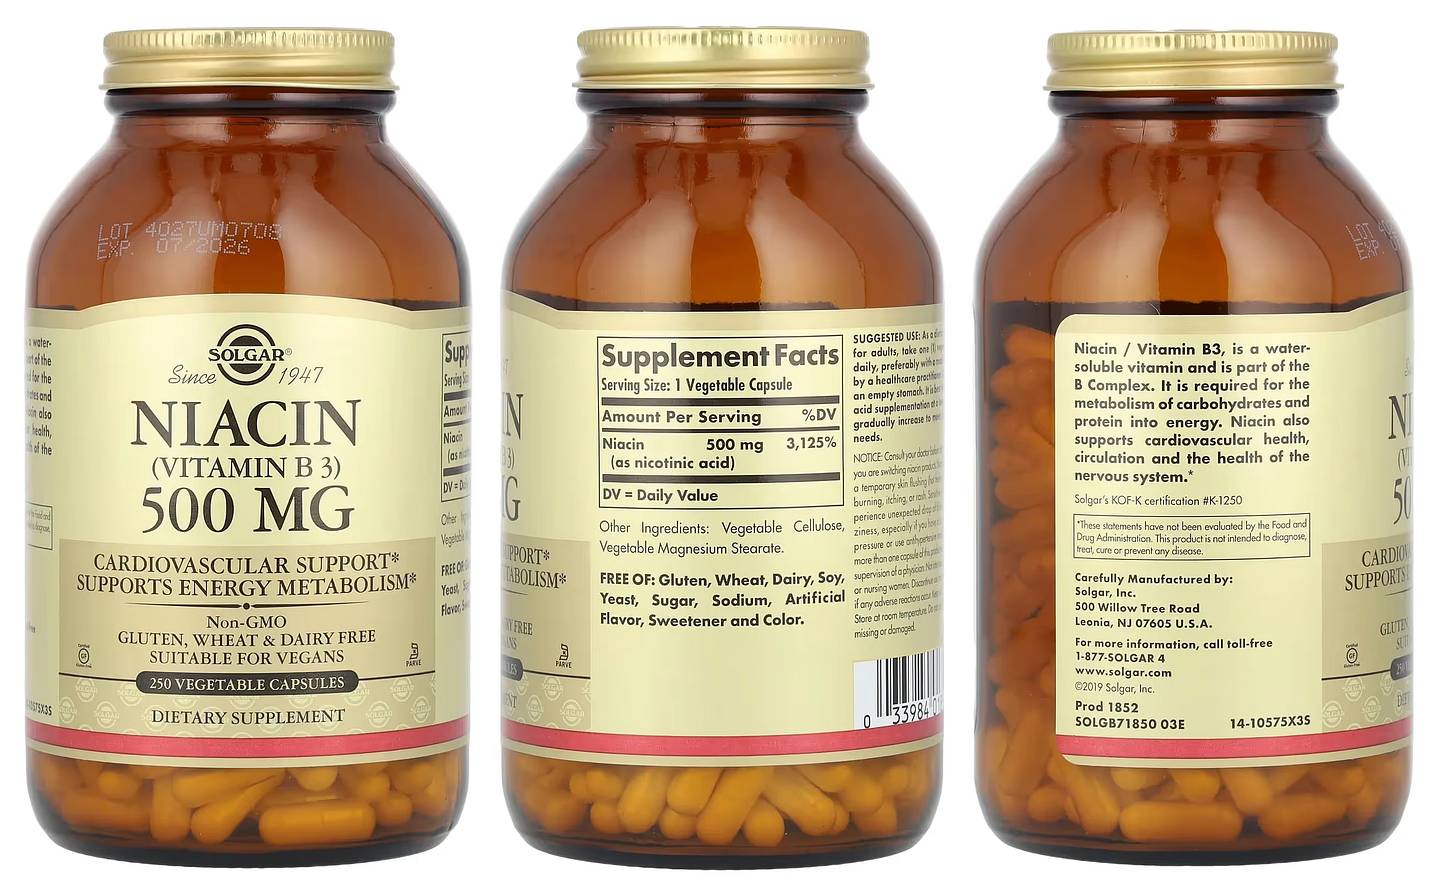 Solgar, Niacin (Vitamin B3) packaging